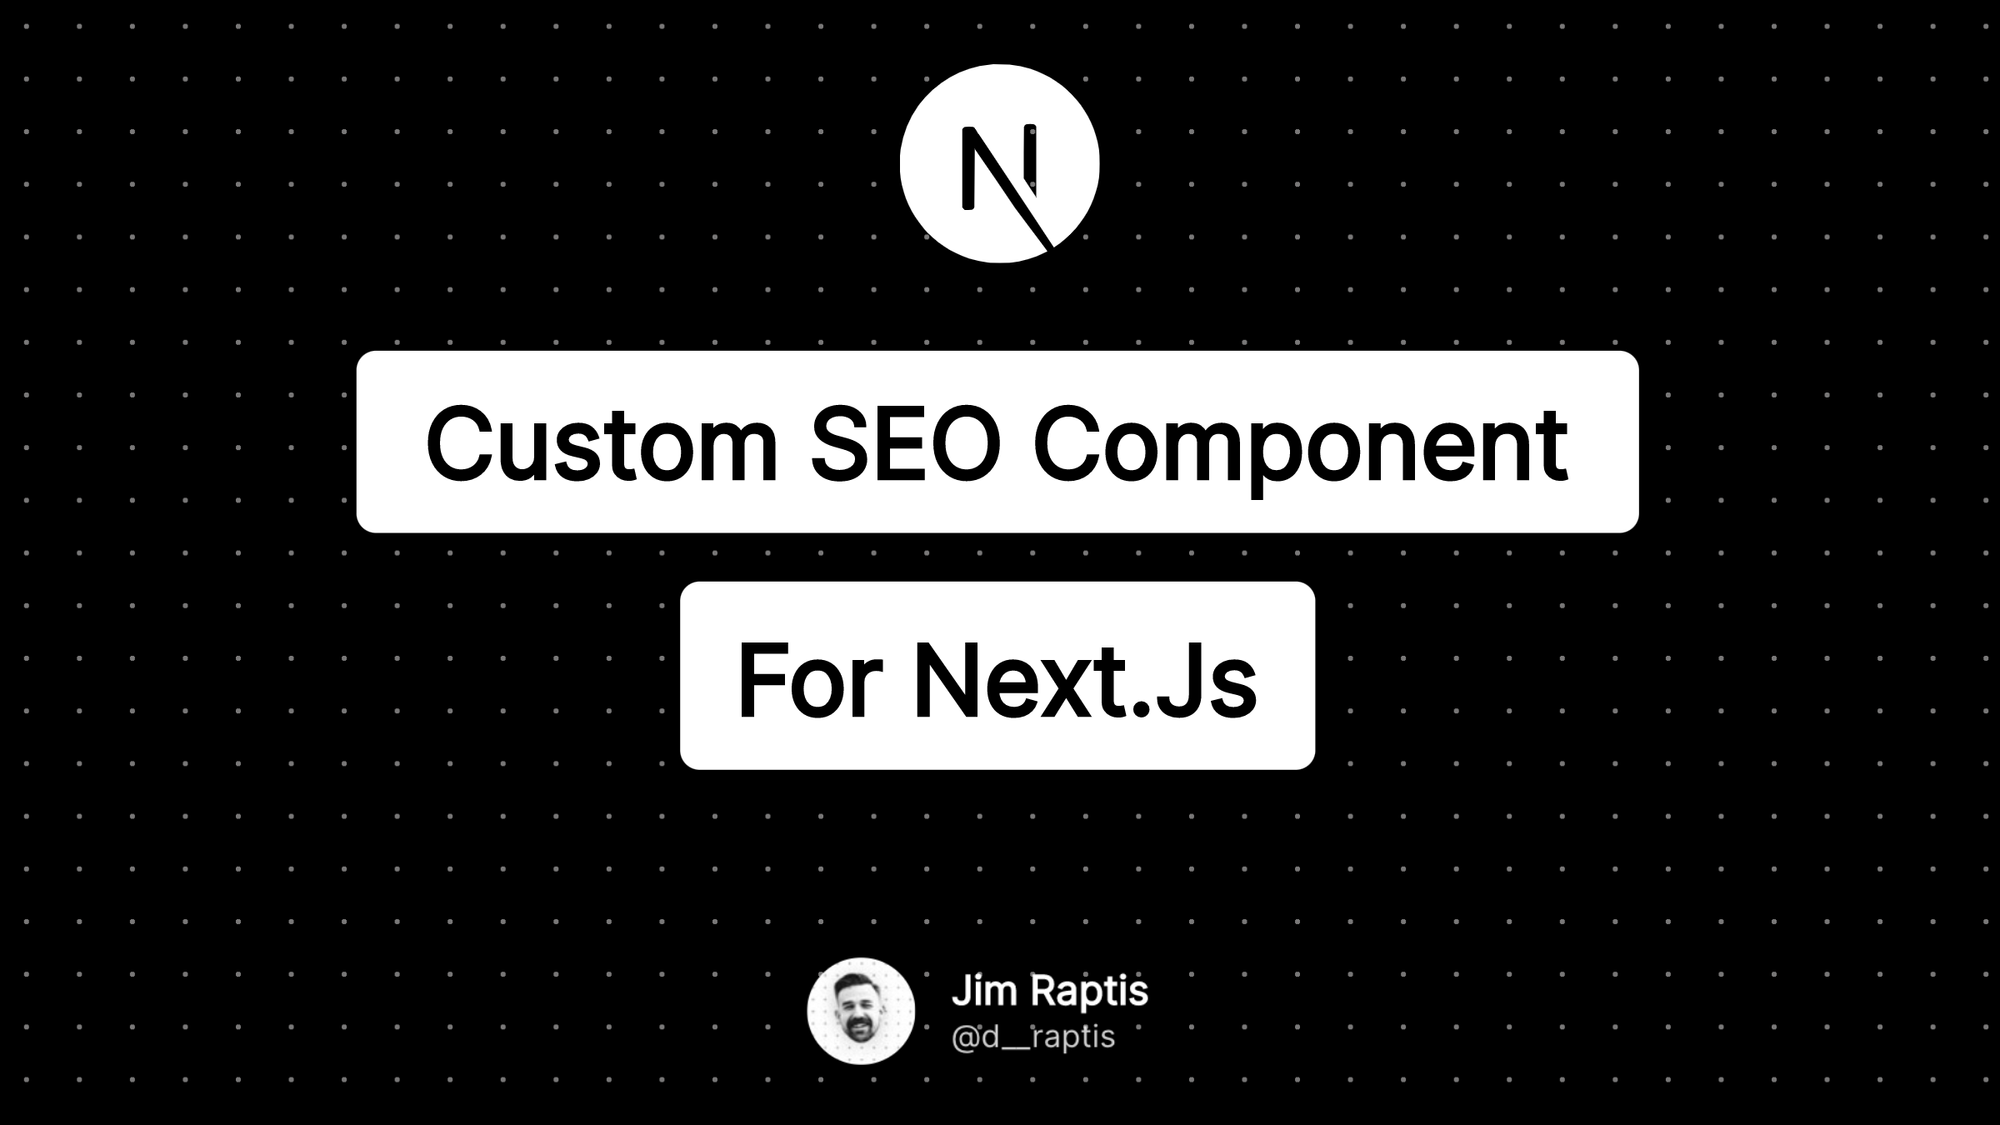 SEO component for Next.js